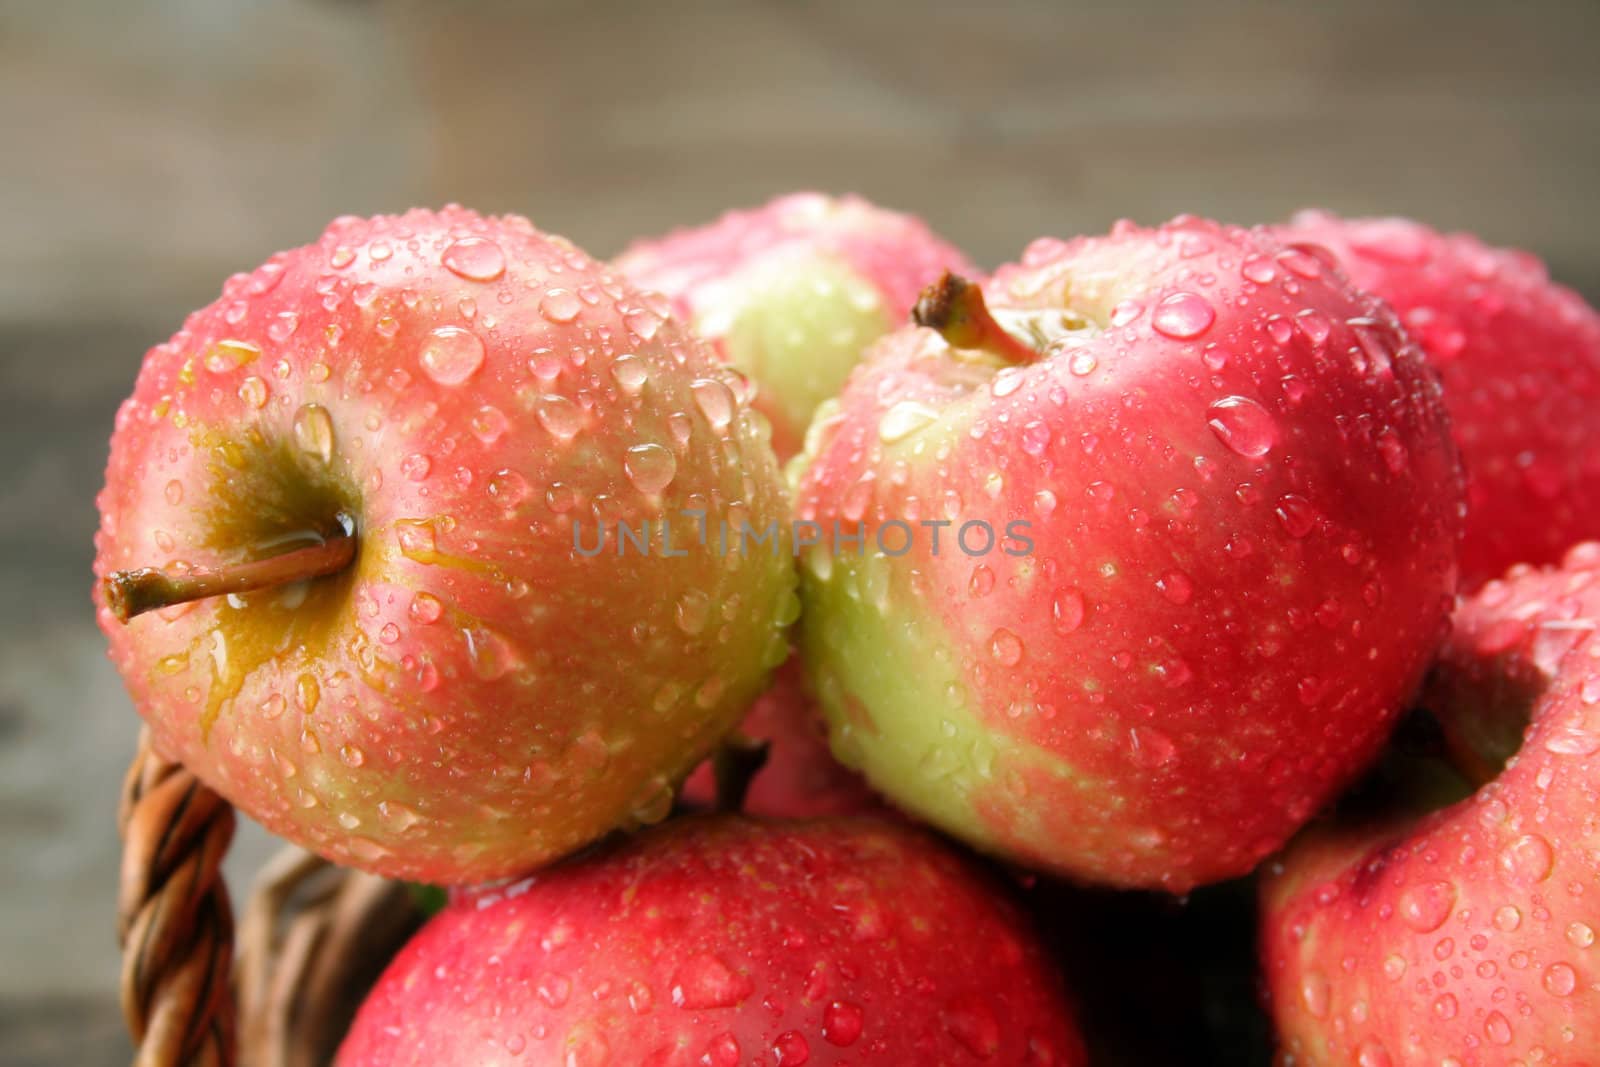 Rain Soaked Apples by thephotoguy